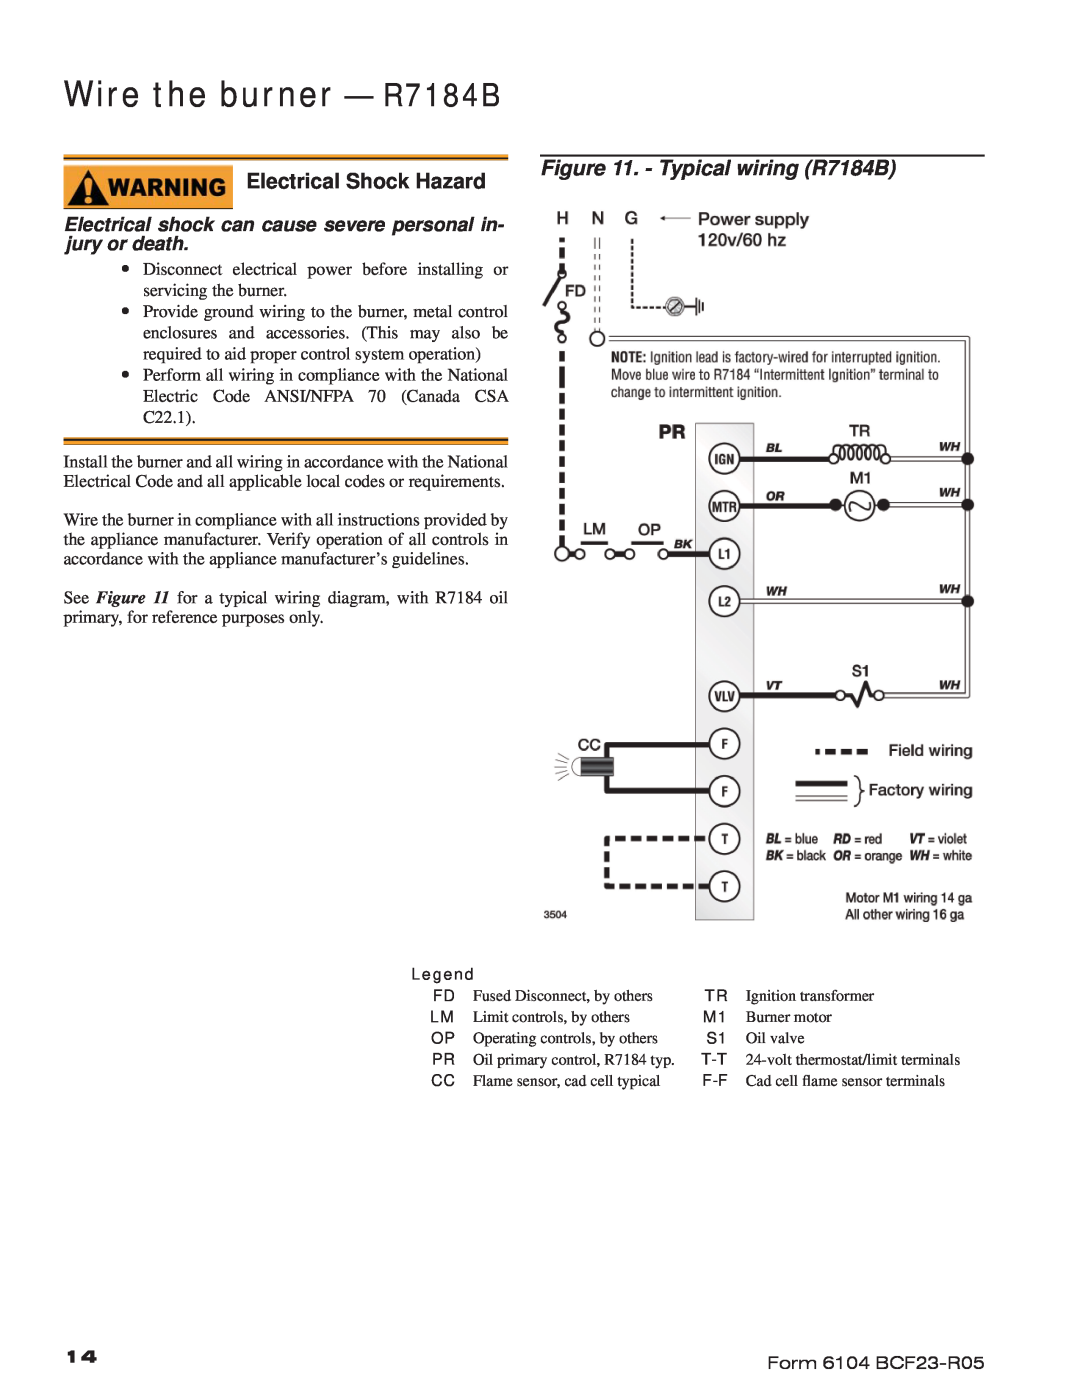 Beckett CF2300, CF1400 manual Wire the burner - R7184B, Electrical Shock Hazard, Typical wiring R7184B 